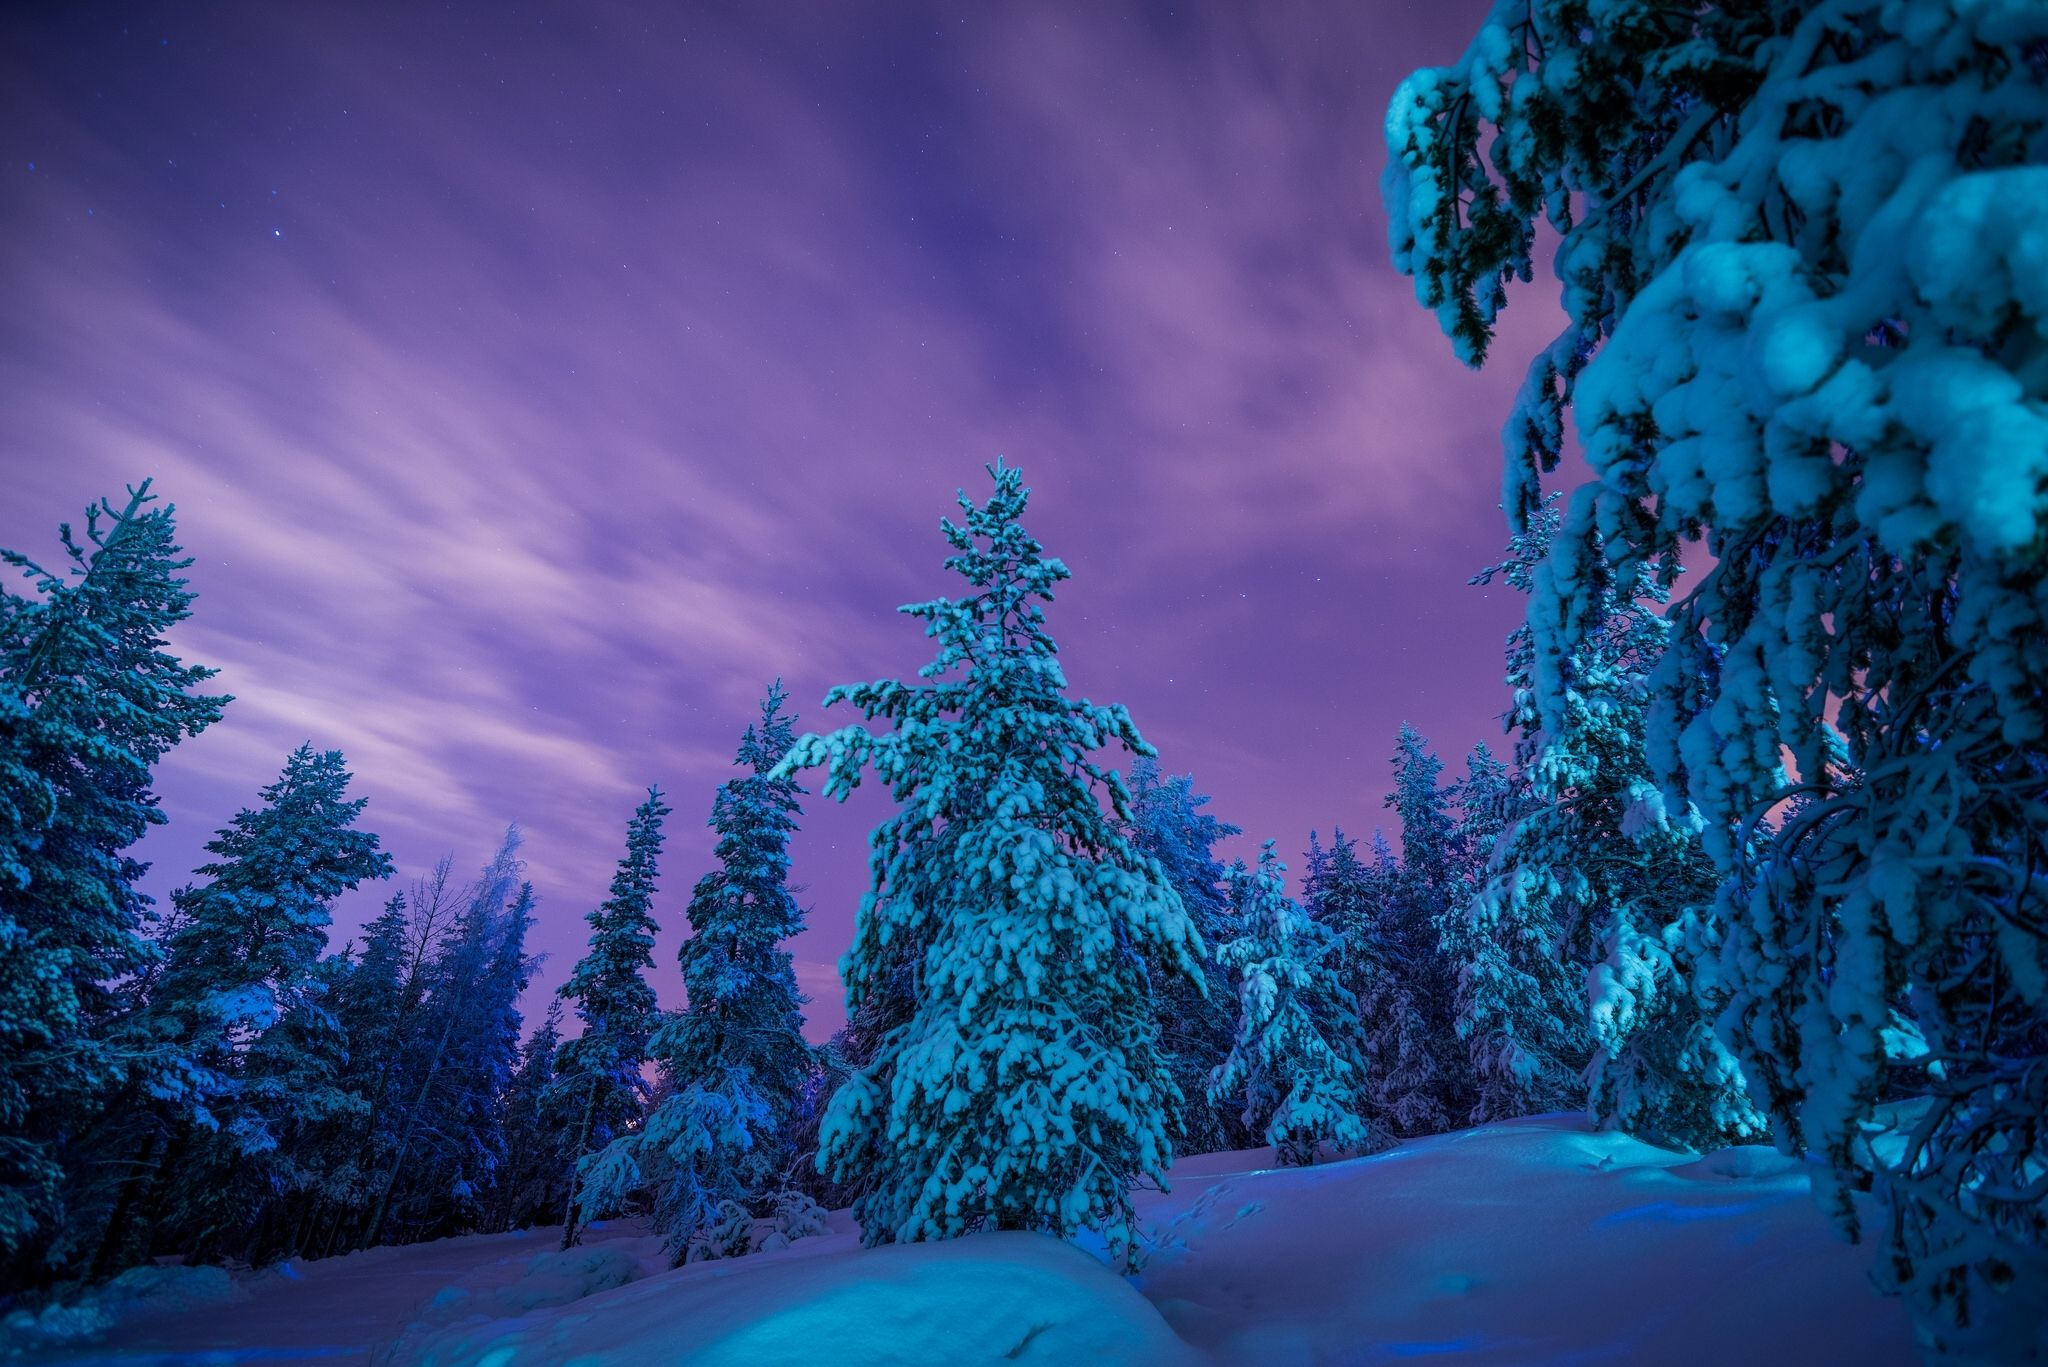 Winter Forest at Dusk Computer Wallpaper, Desktop Backgroundx1367. Winter picture, Winter landscape, Background image